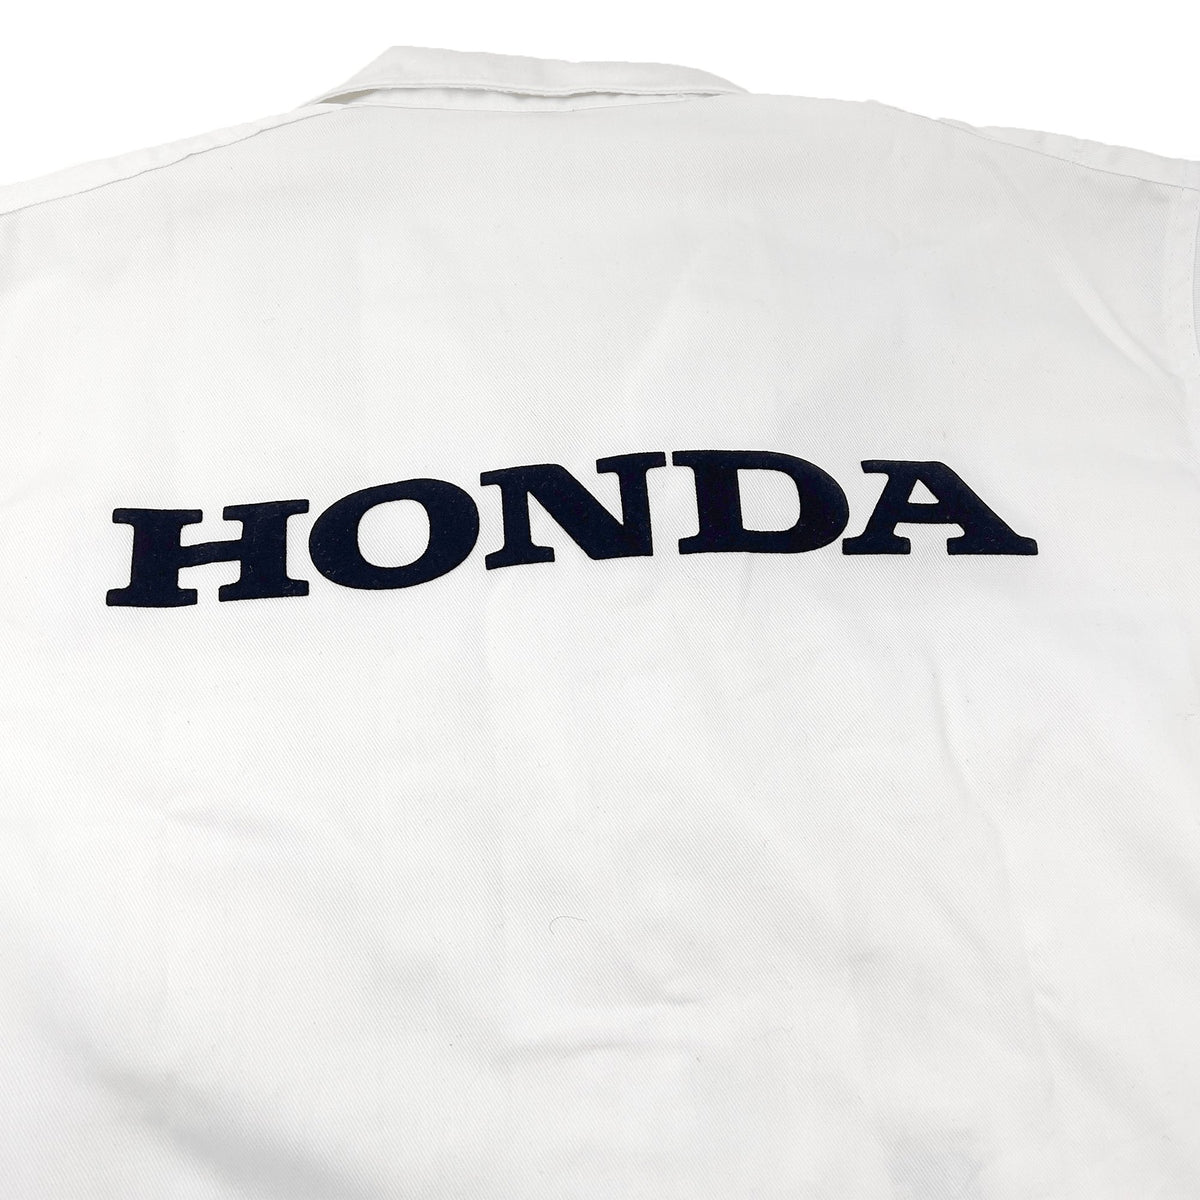 New Retro Showa Era JDM Honda Primo Excellent Mechanic Jacket White - Sugoi JDM